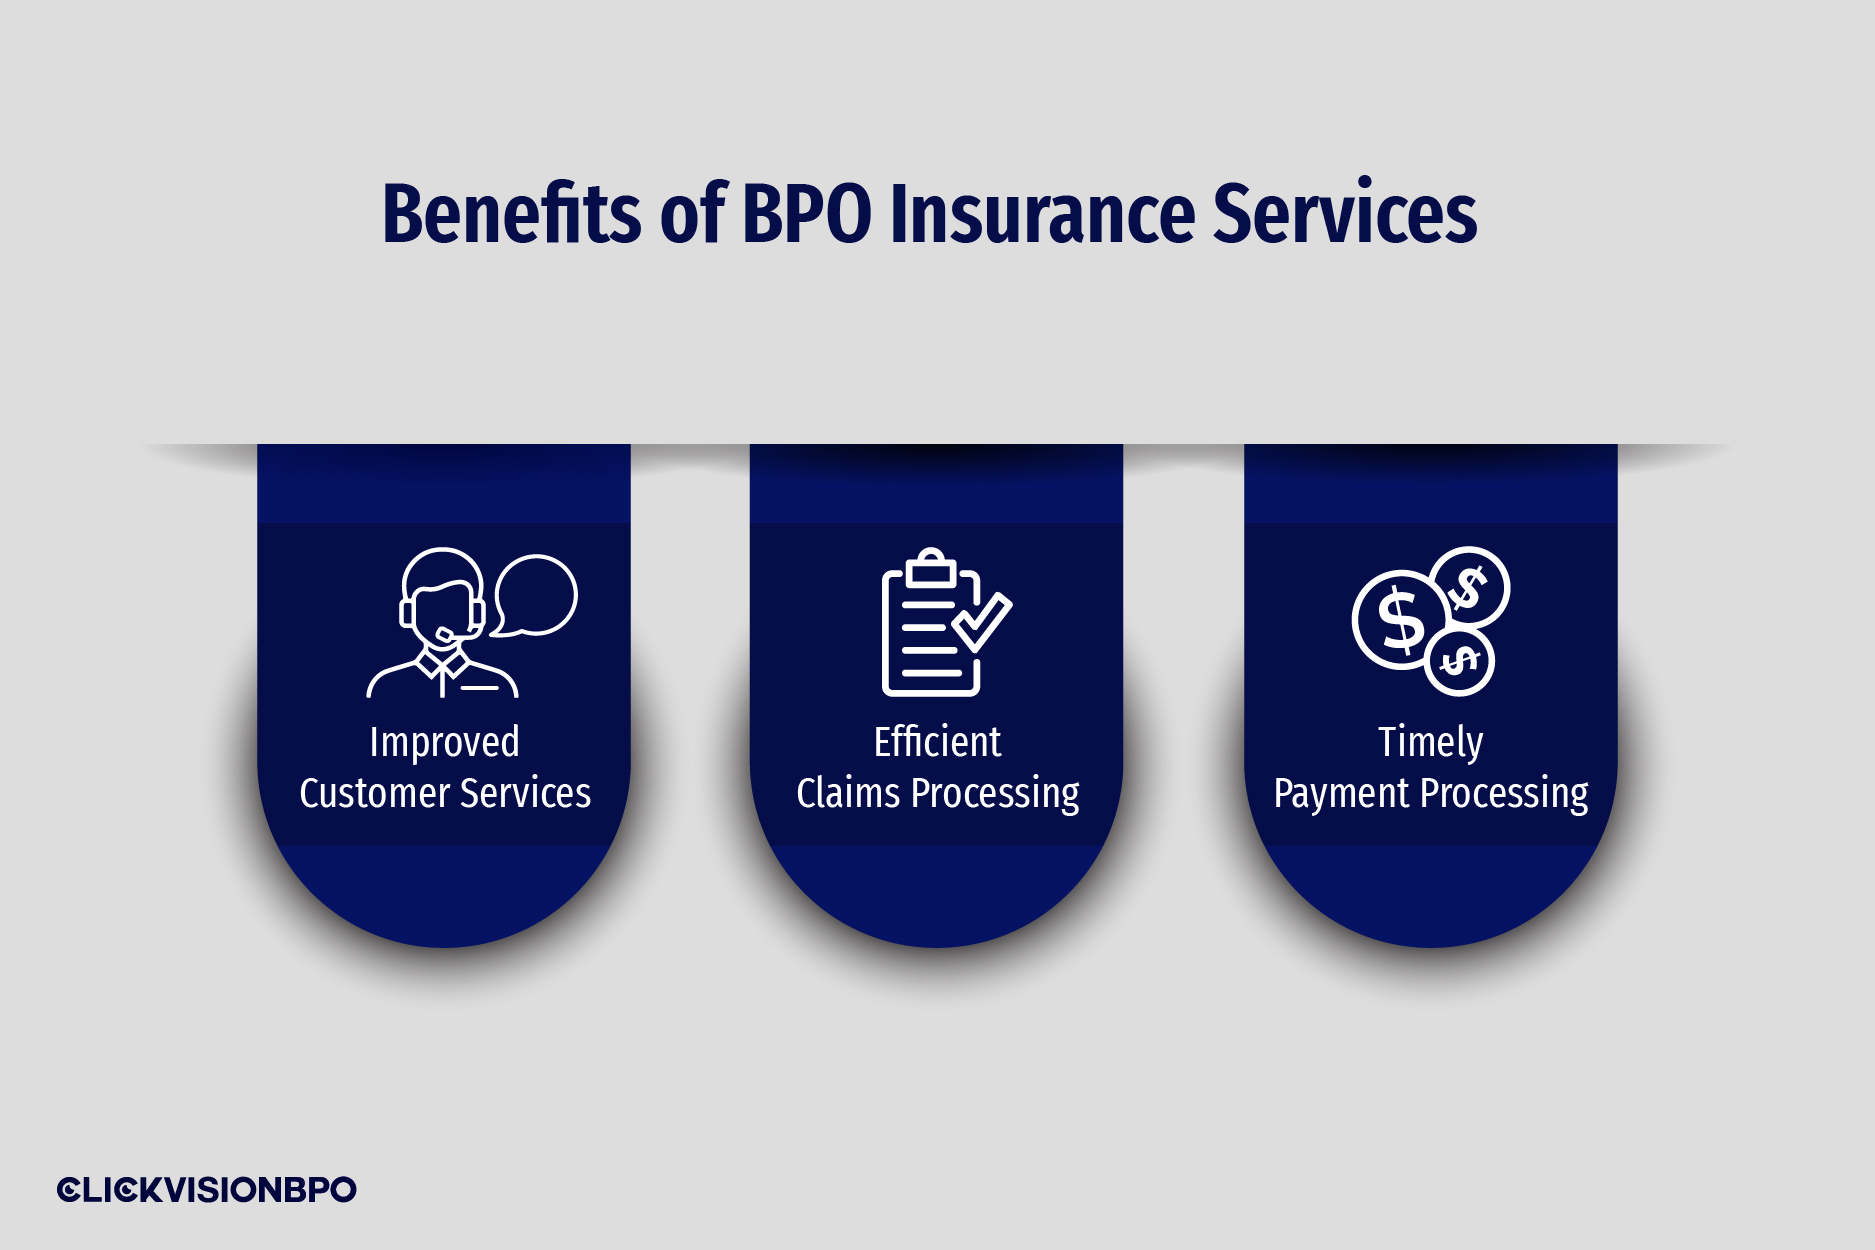 Benefits of BPO Insurance Services